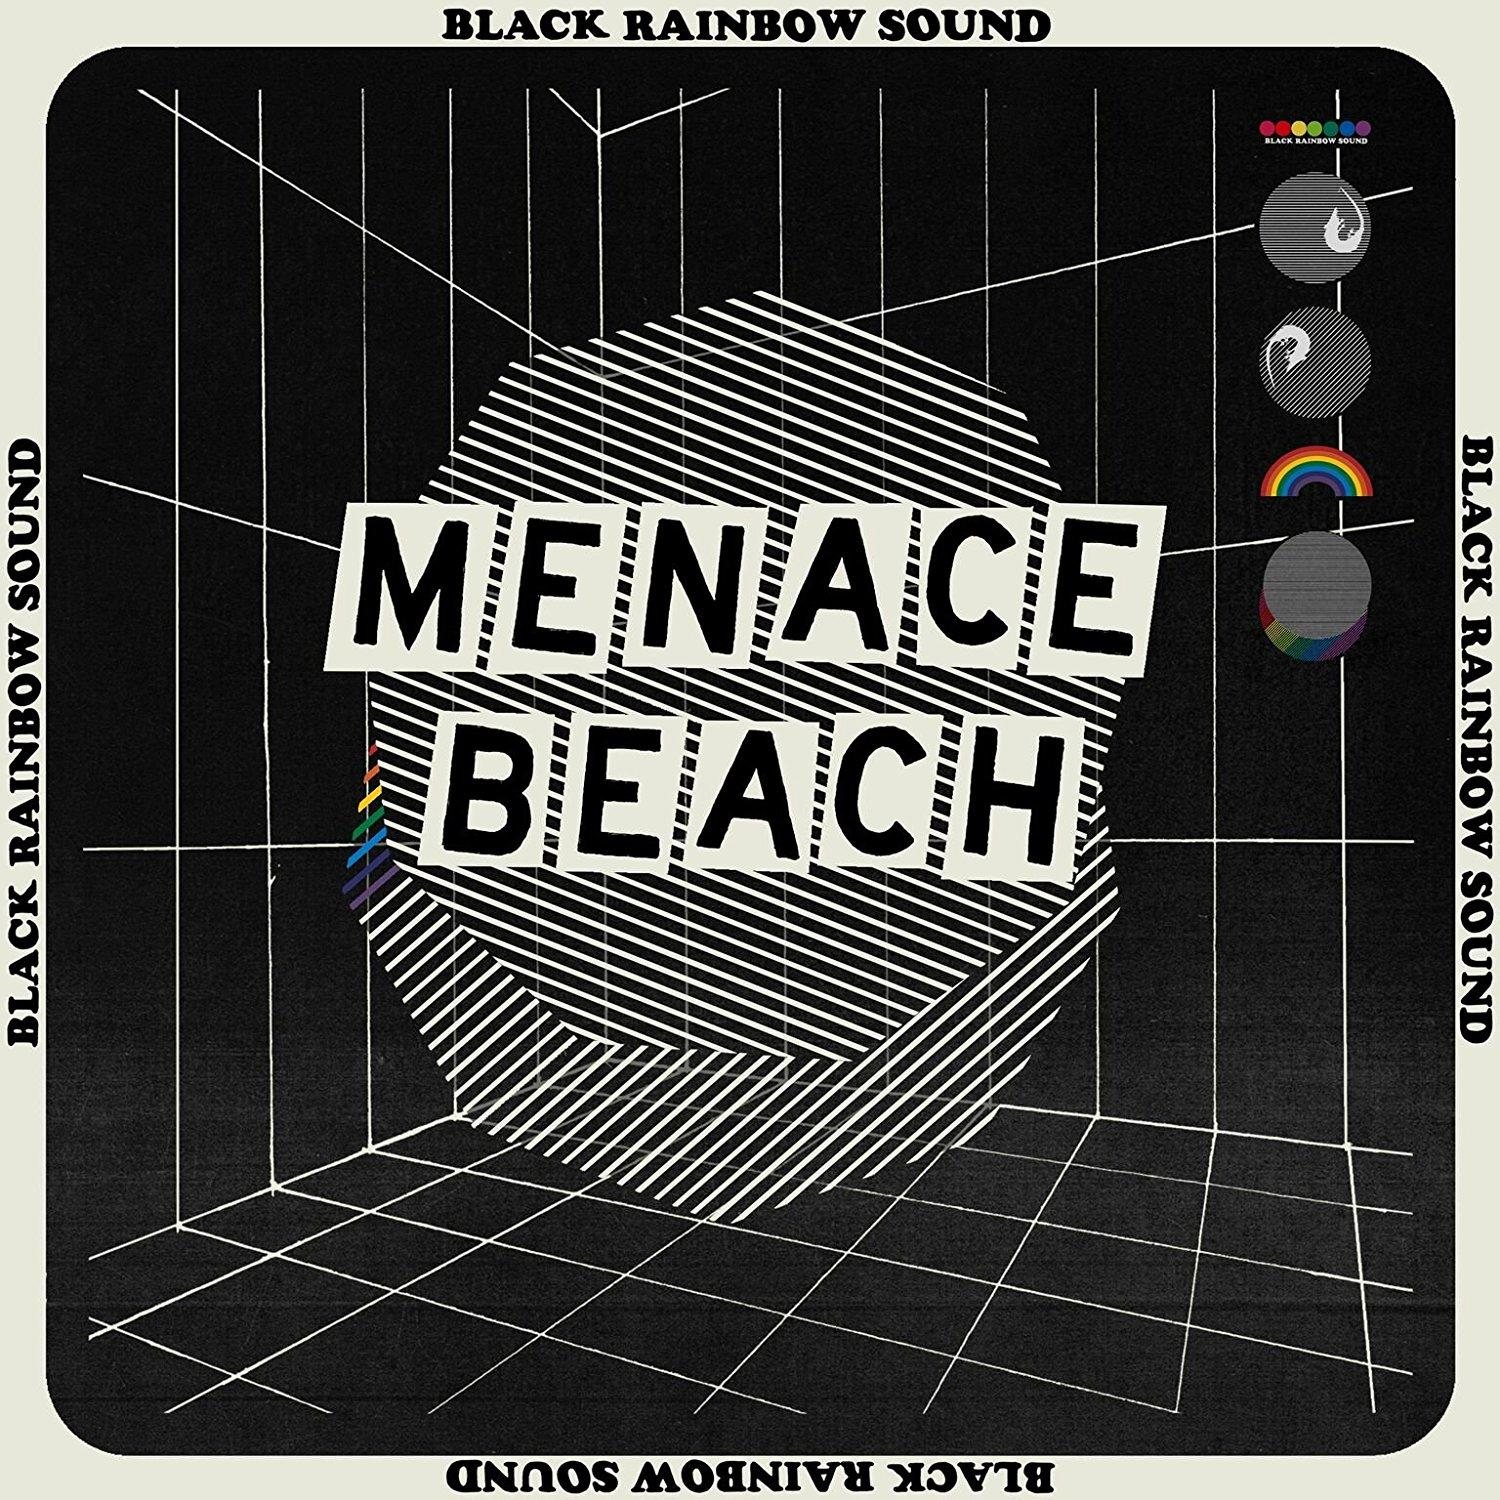 Menace Beach - - (CD) Sound Rainbow Black